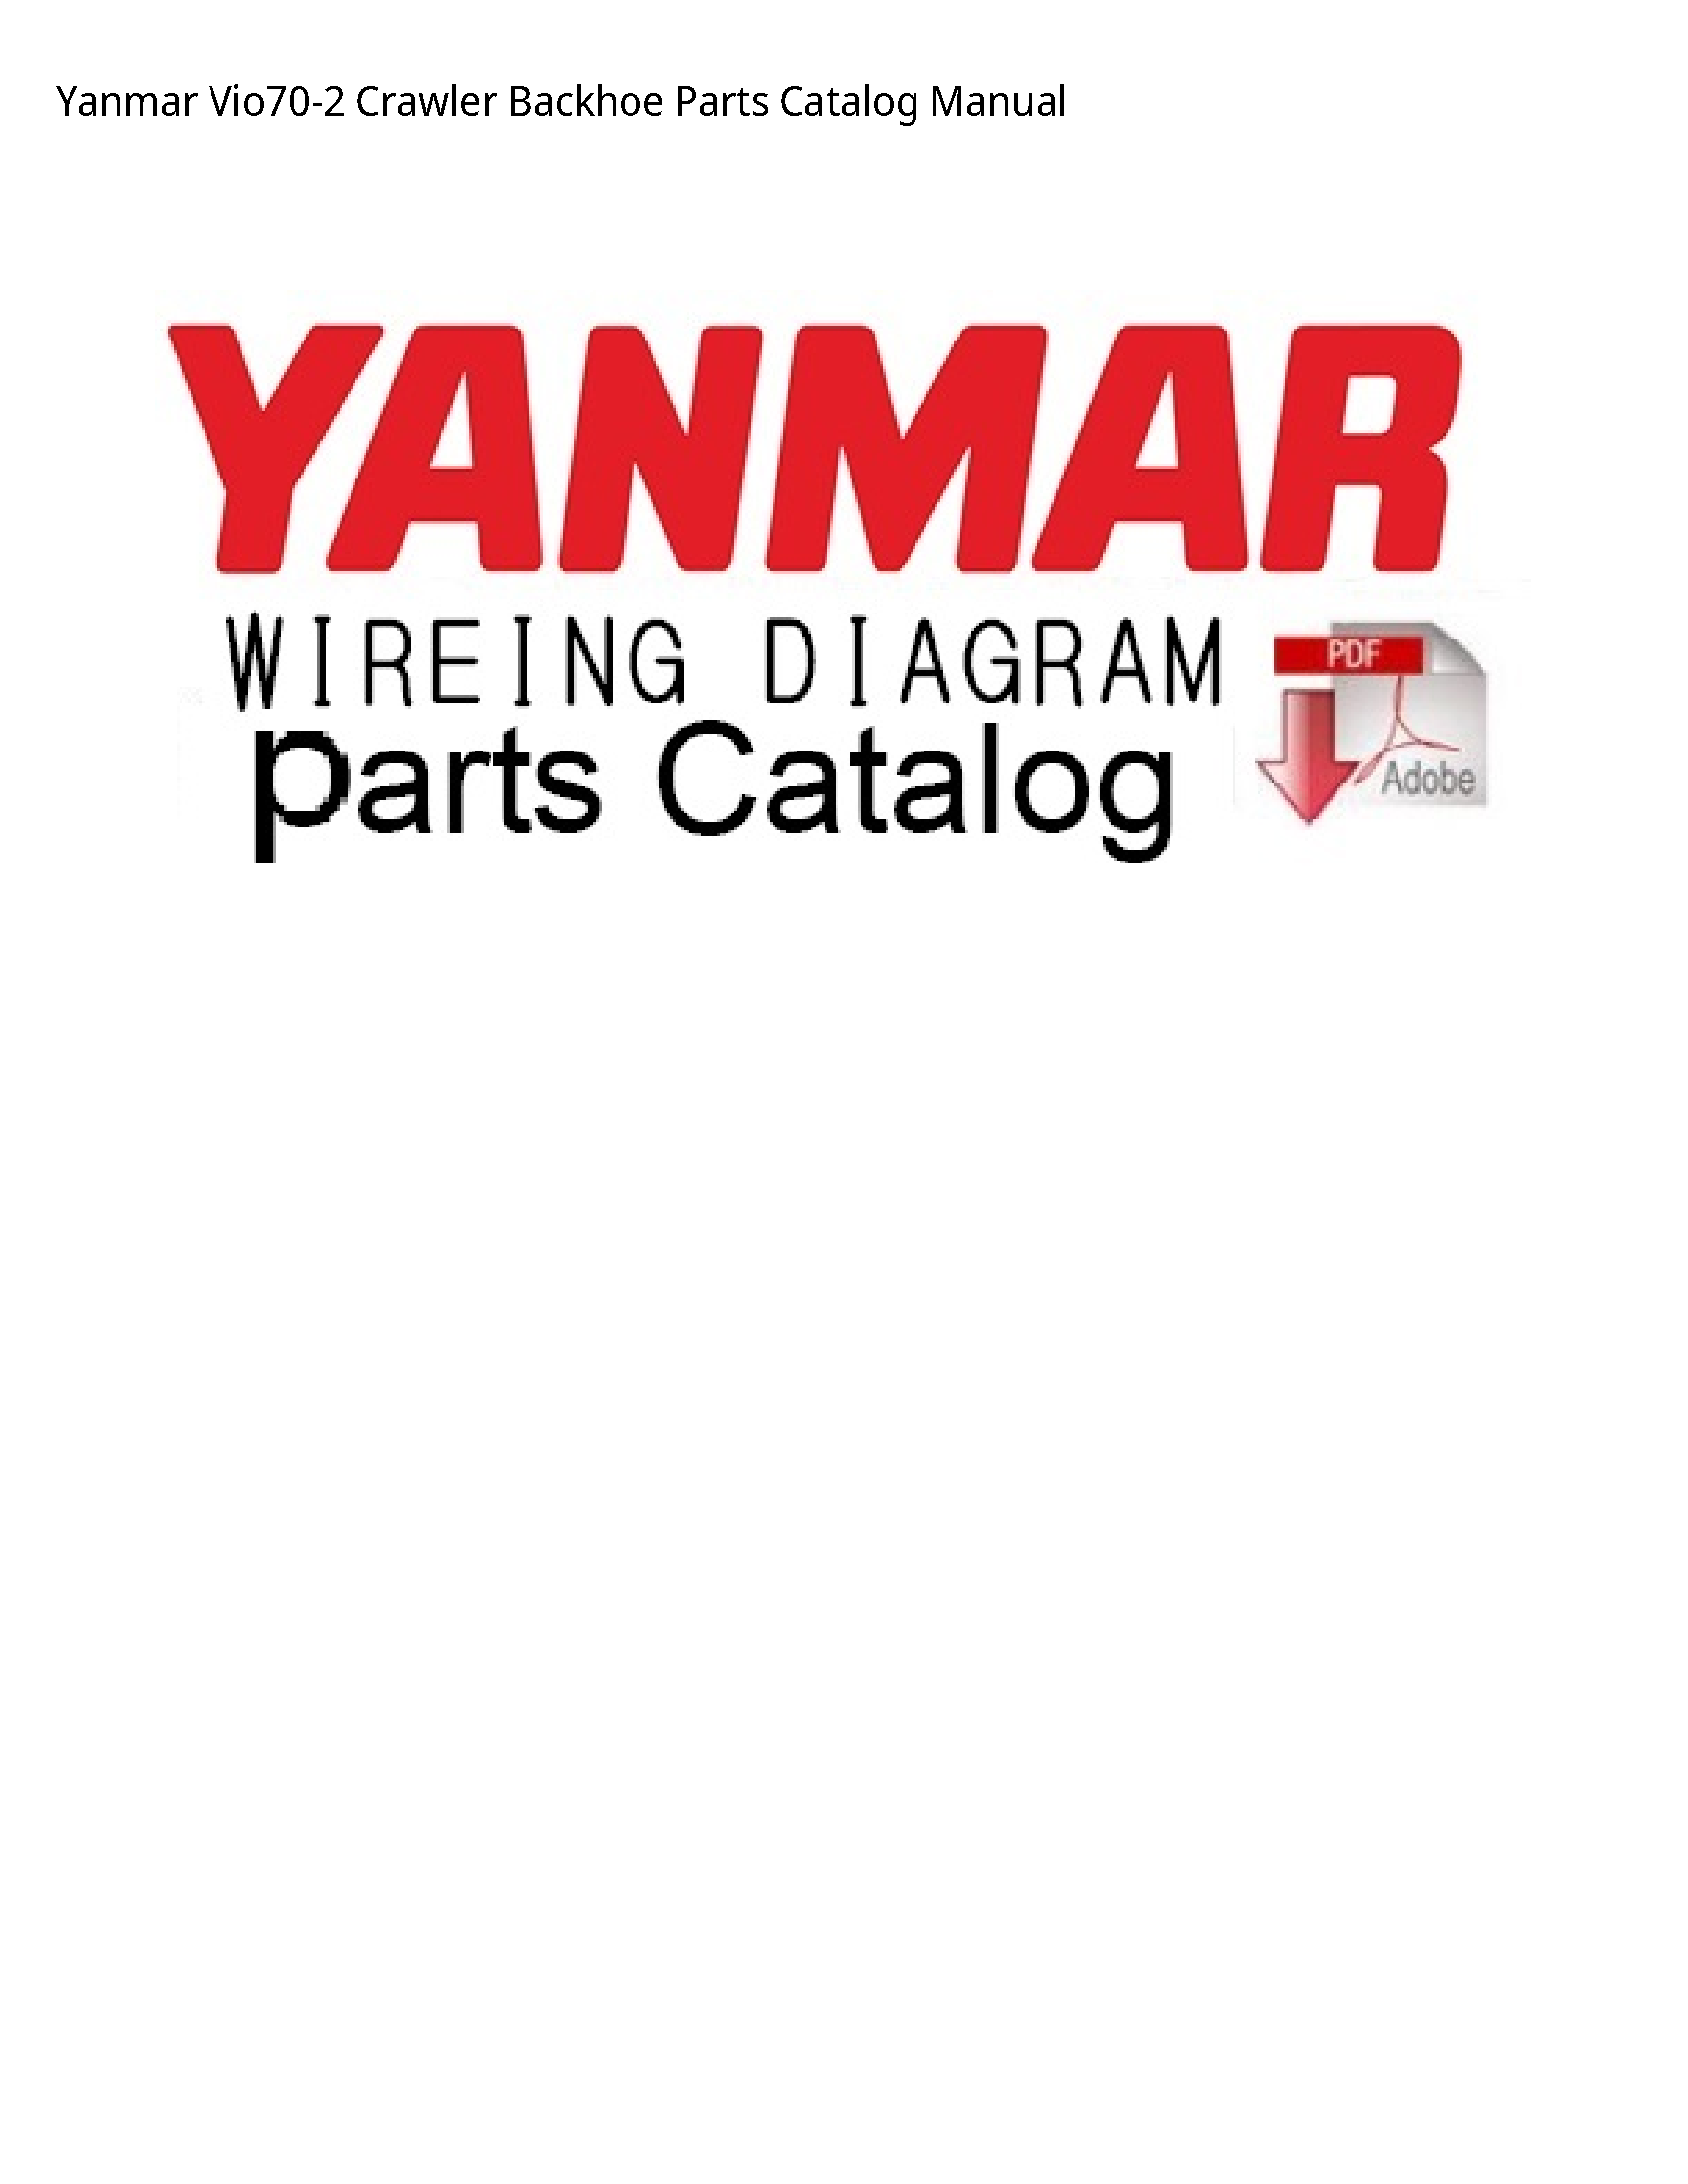 Yanmar Vio70-2 Crawler Backhoe Parts Catalog manual